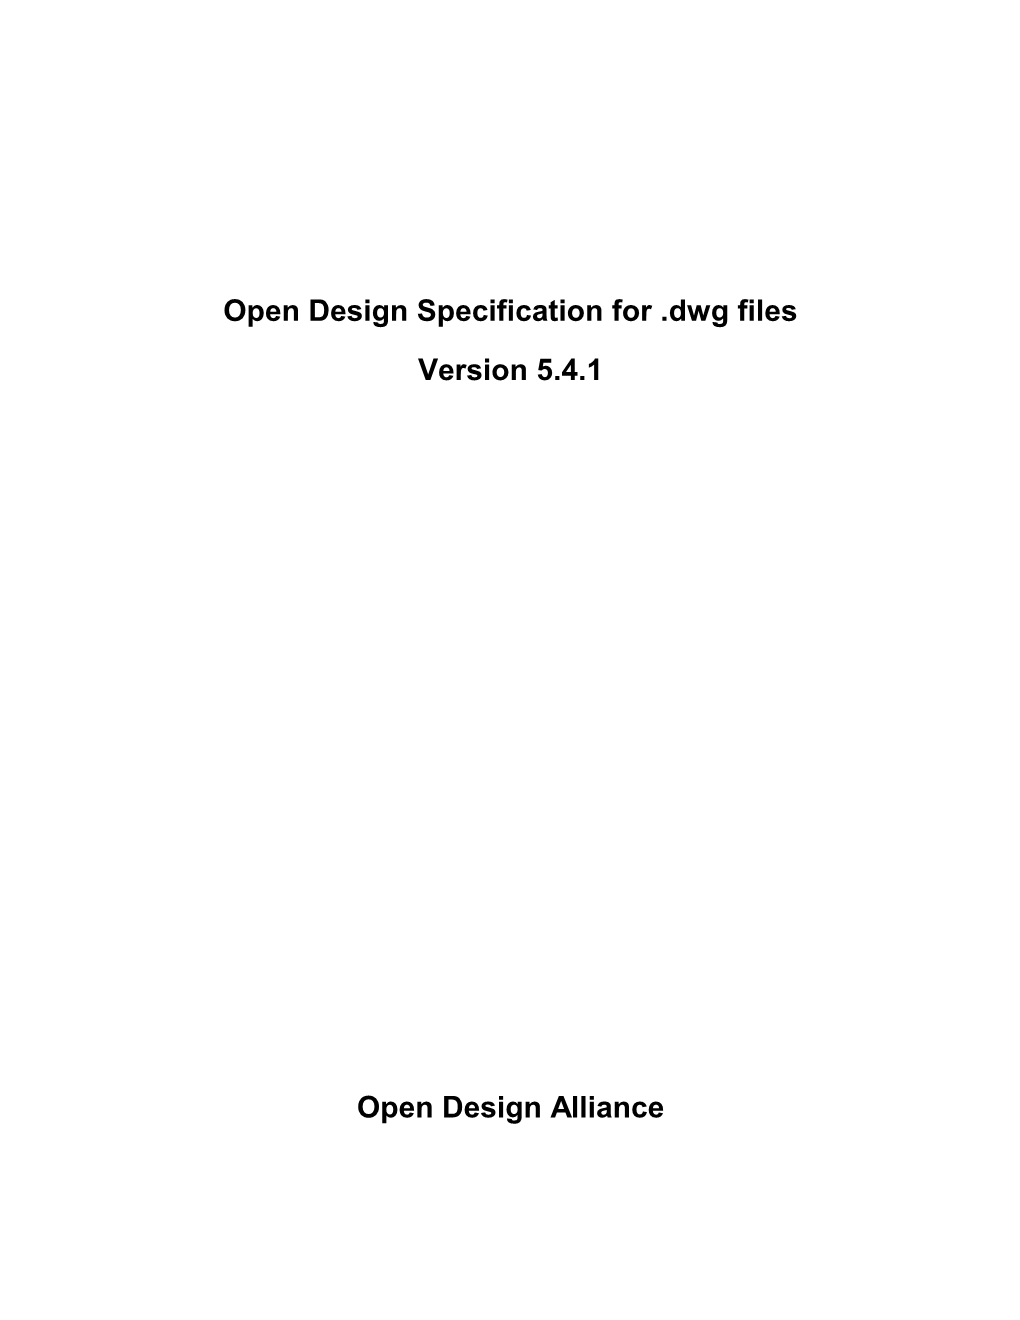 Open Design Specification for .Dwg Files Version 5.4.1 Open Design Alliance